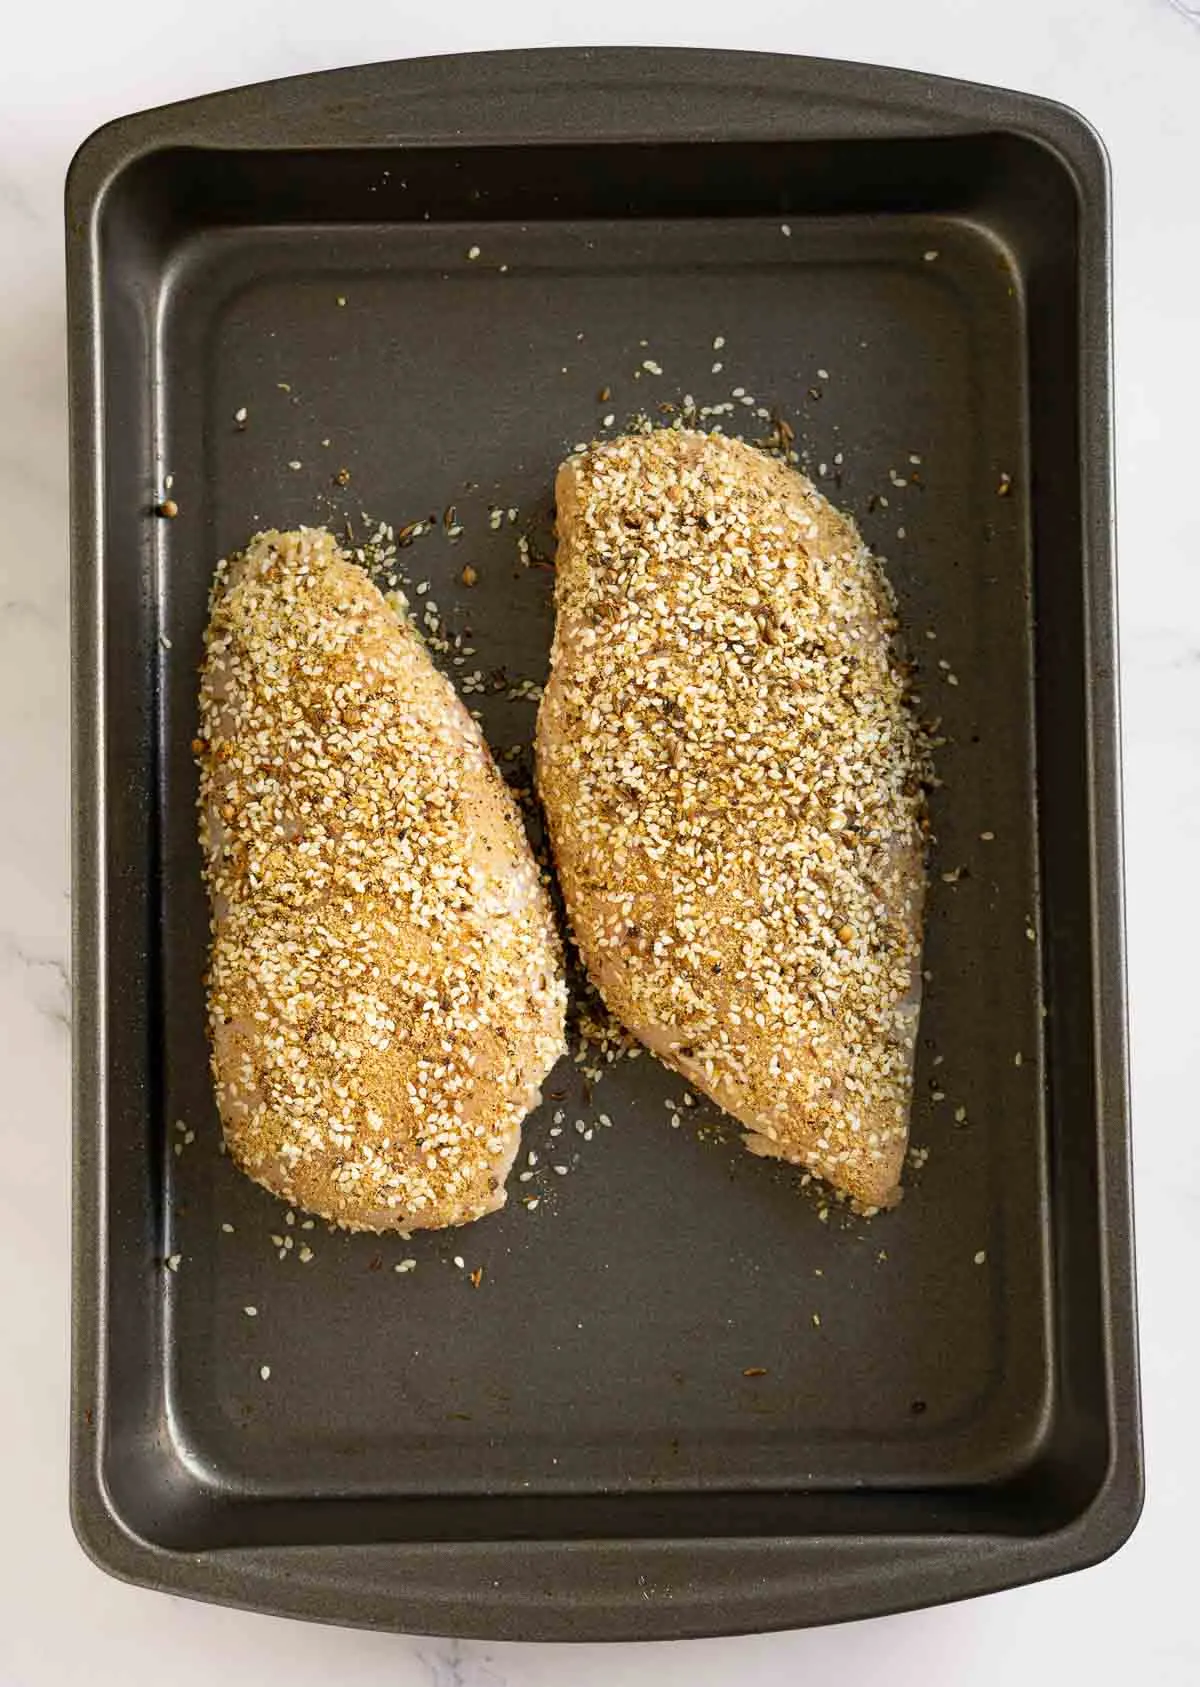 Dukkah coated chicken breast on a baking pan